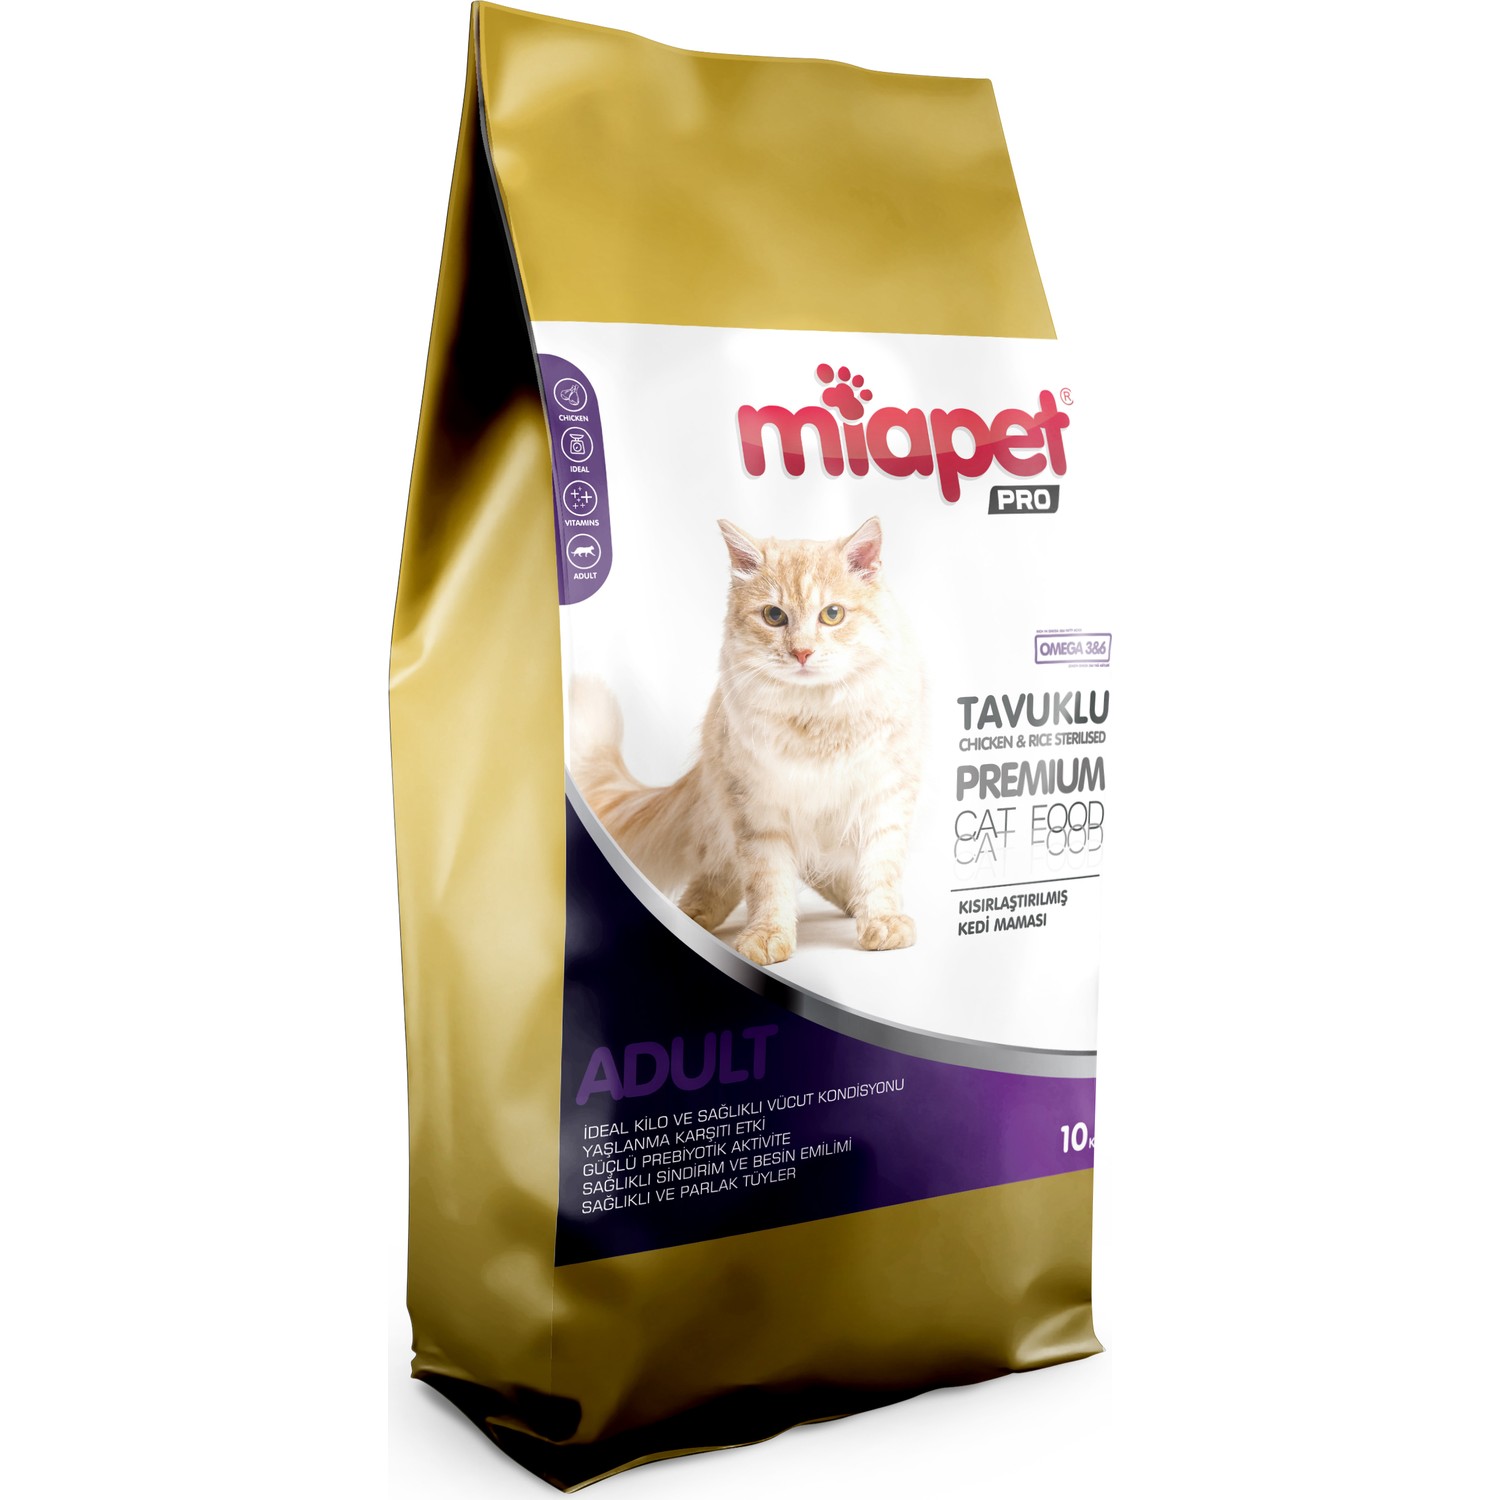 Miapet Pro Tavuklu Kısırlaştırılmış Kedi Maması 10 kg Fiyatı